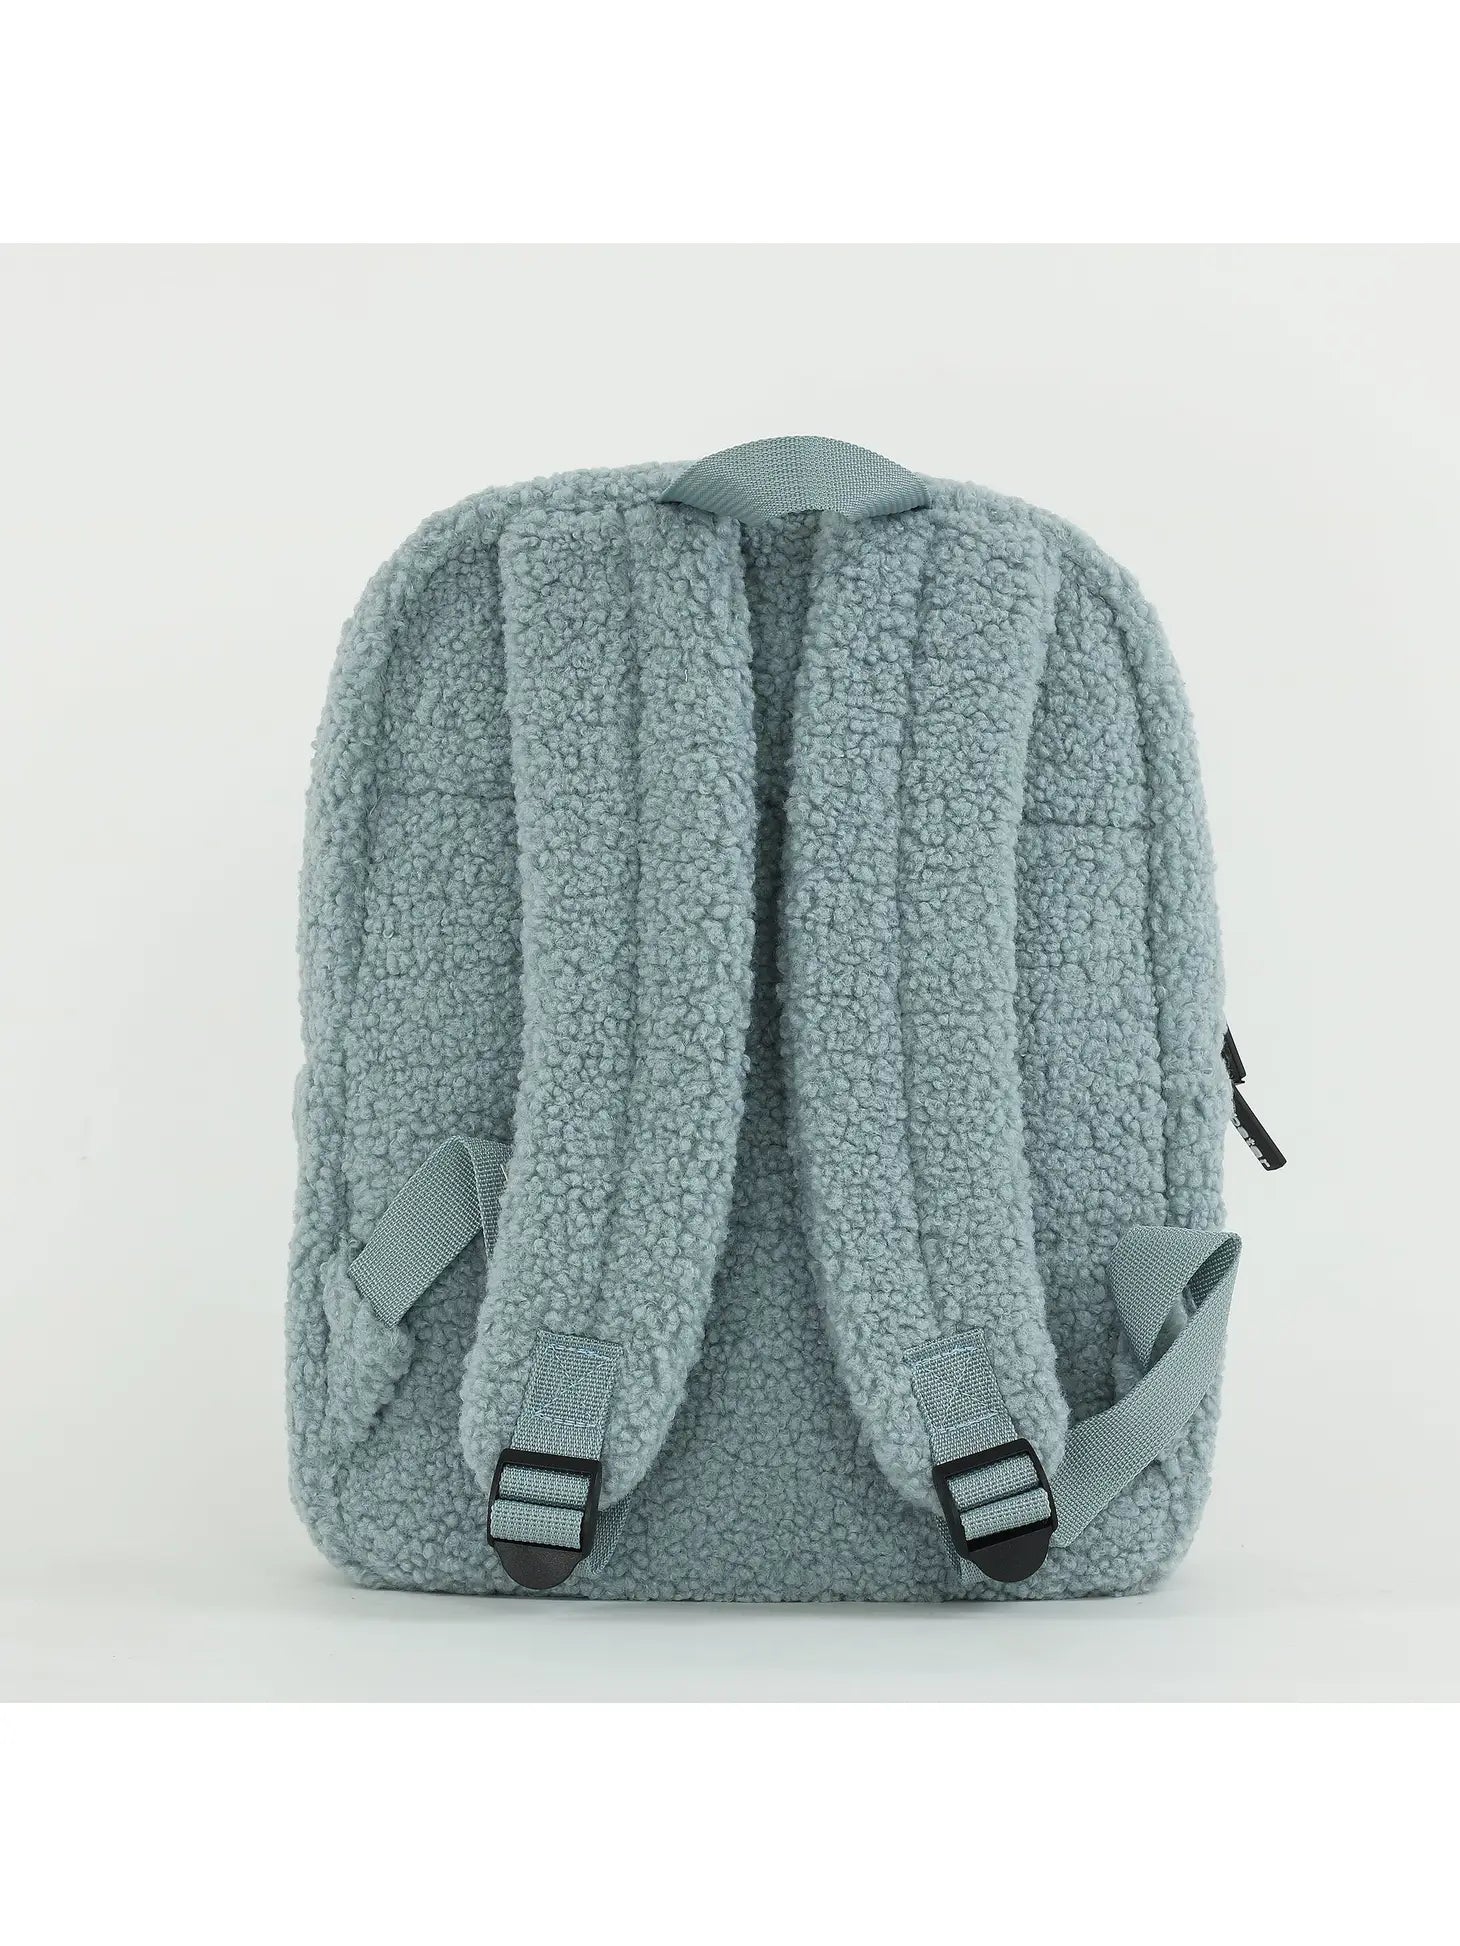 Personalized Fluffy Teddy Kids Backpack - DUSTY BLUE